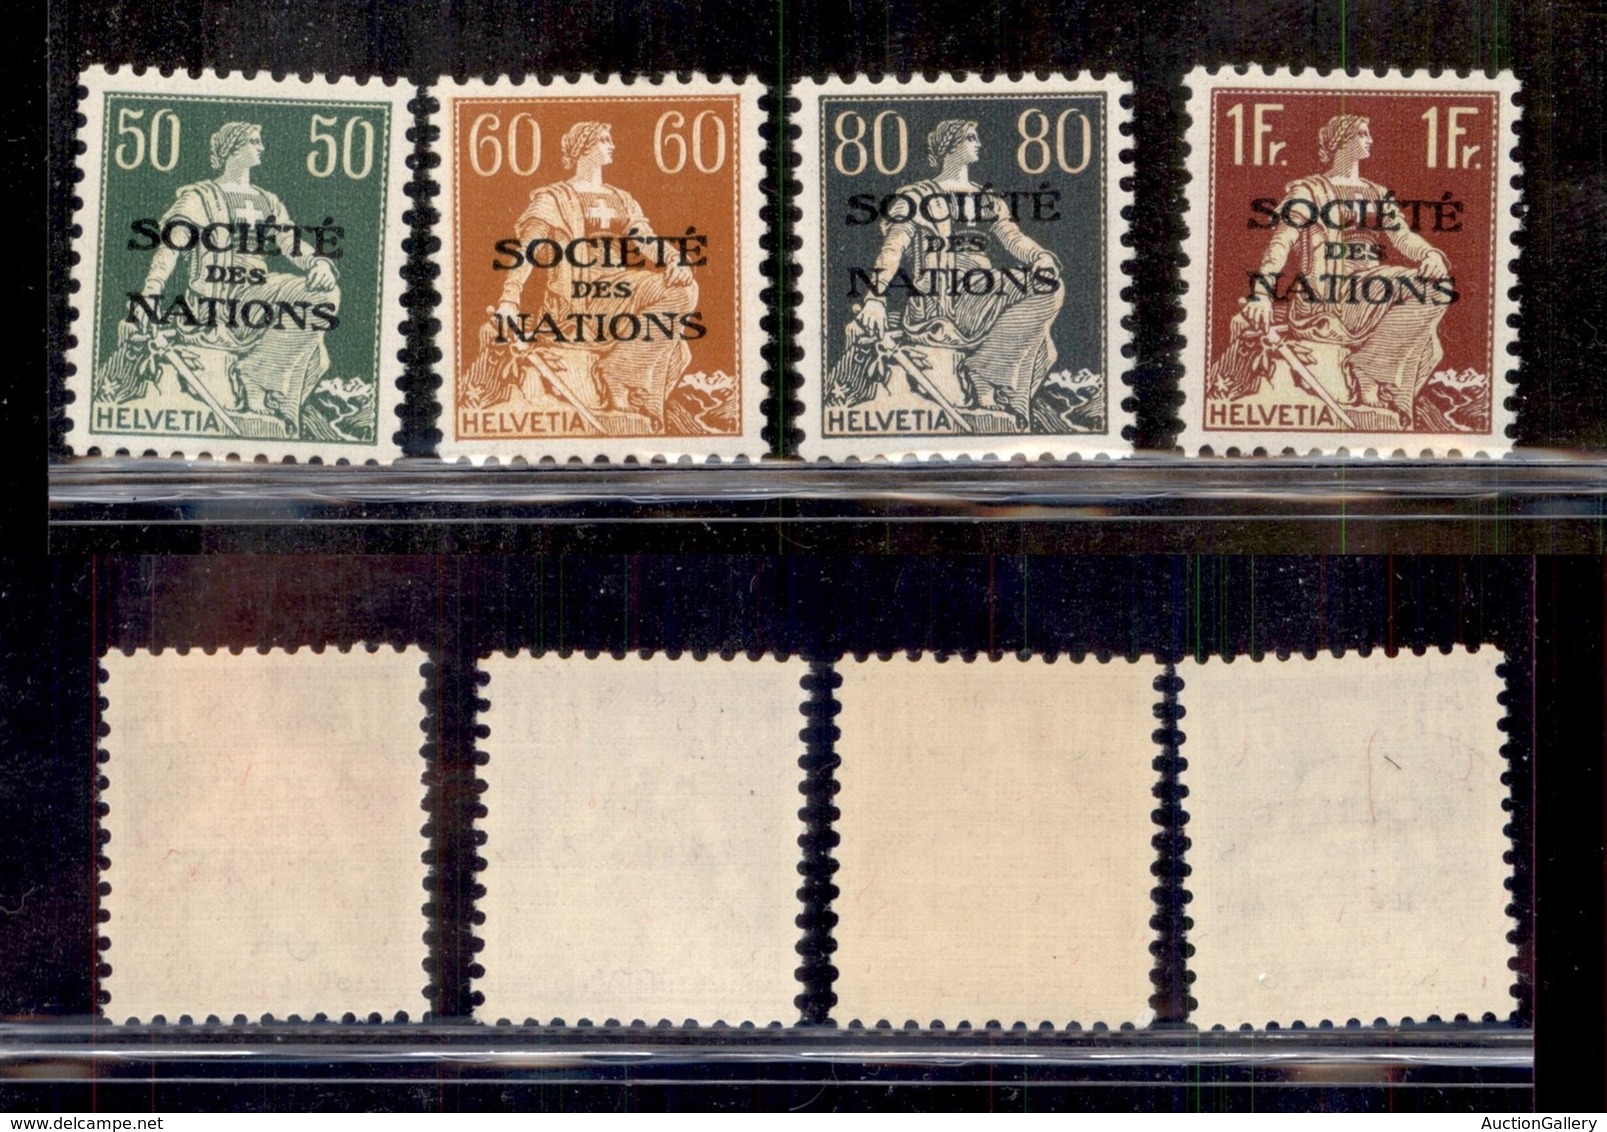 ESTERO - SVIZZERA - 1922 - Soprastampati “Société Des Nations” (9Z/12Z) - Serie Completa - Gomma Integra (220) - 1843-1852 Federal & Cantonal Stamps